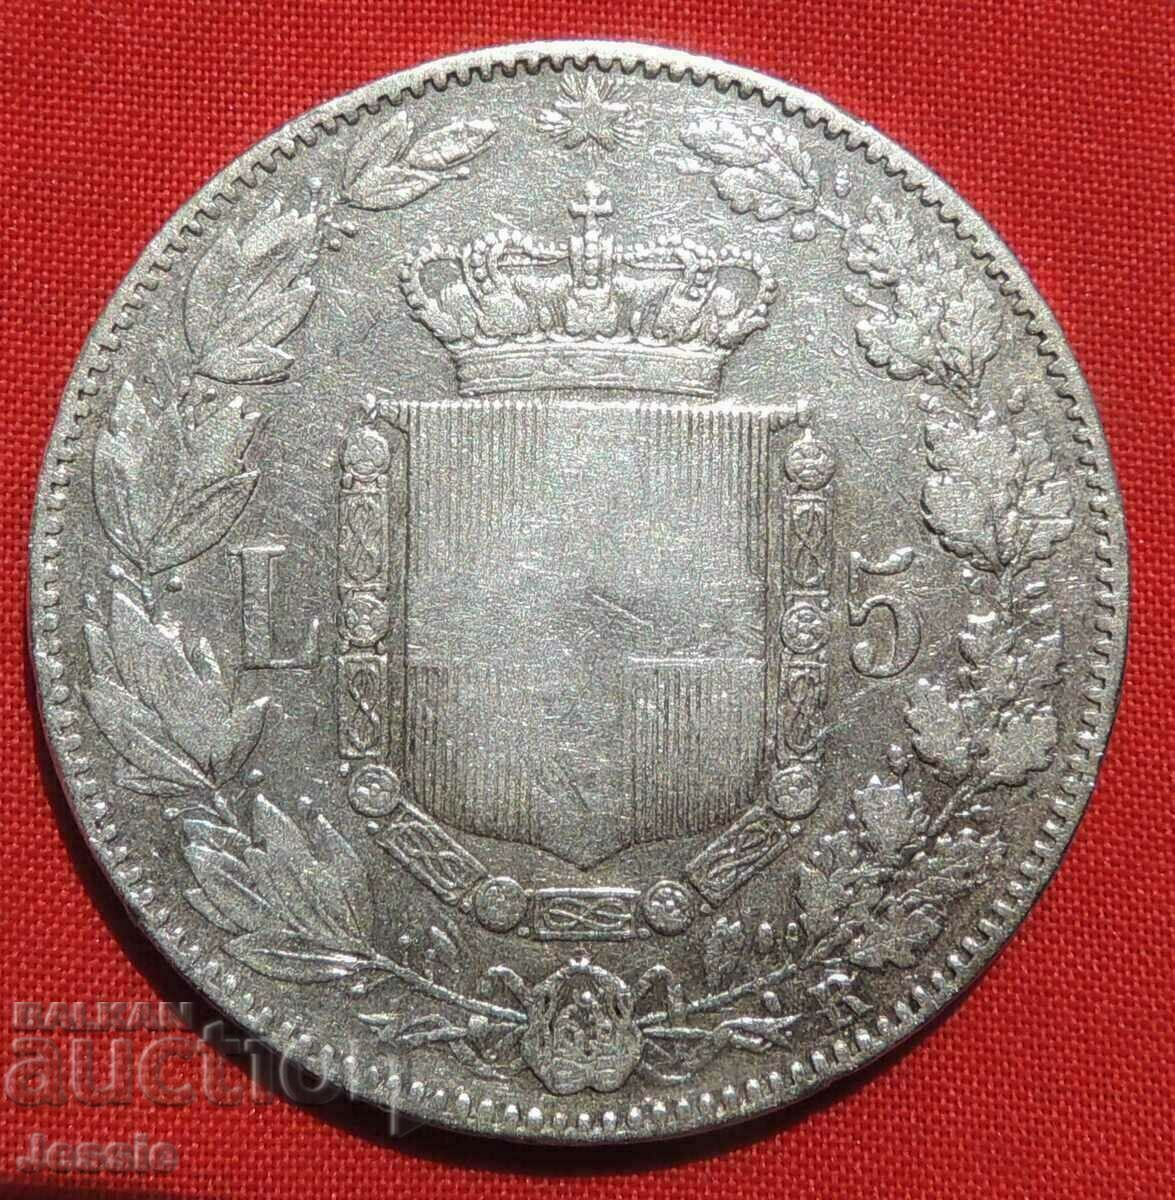 5 Lire 1879 R Italia argint NU MADE IN CHINA !